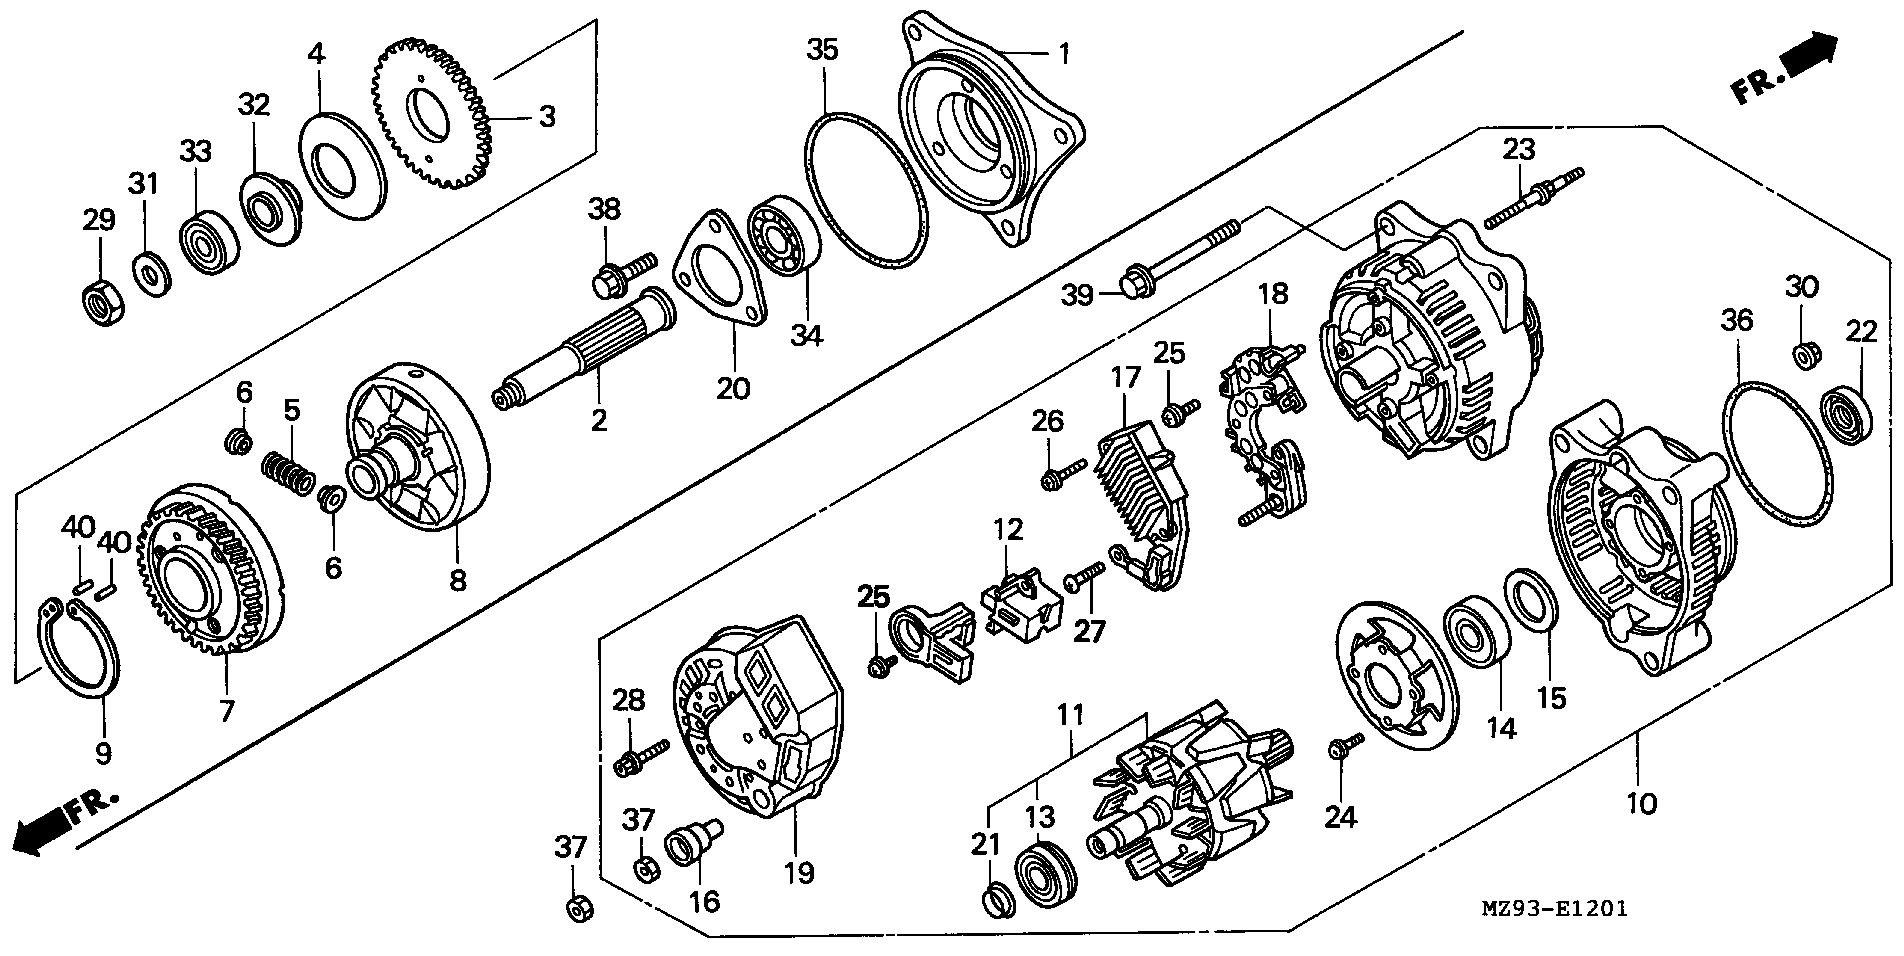 Parts fiche Generator ST1100